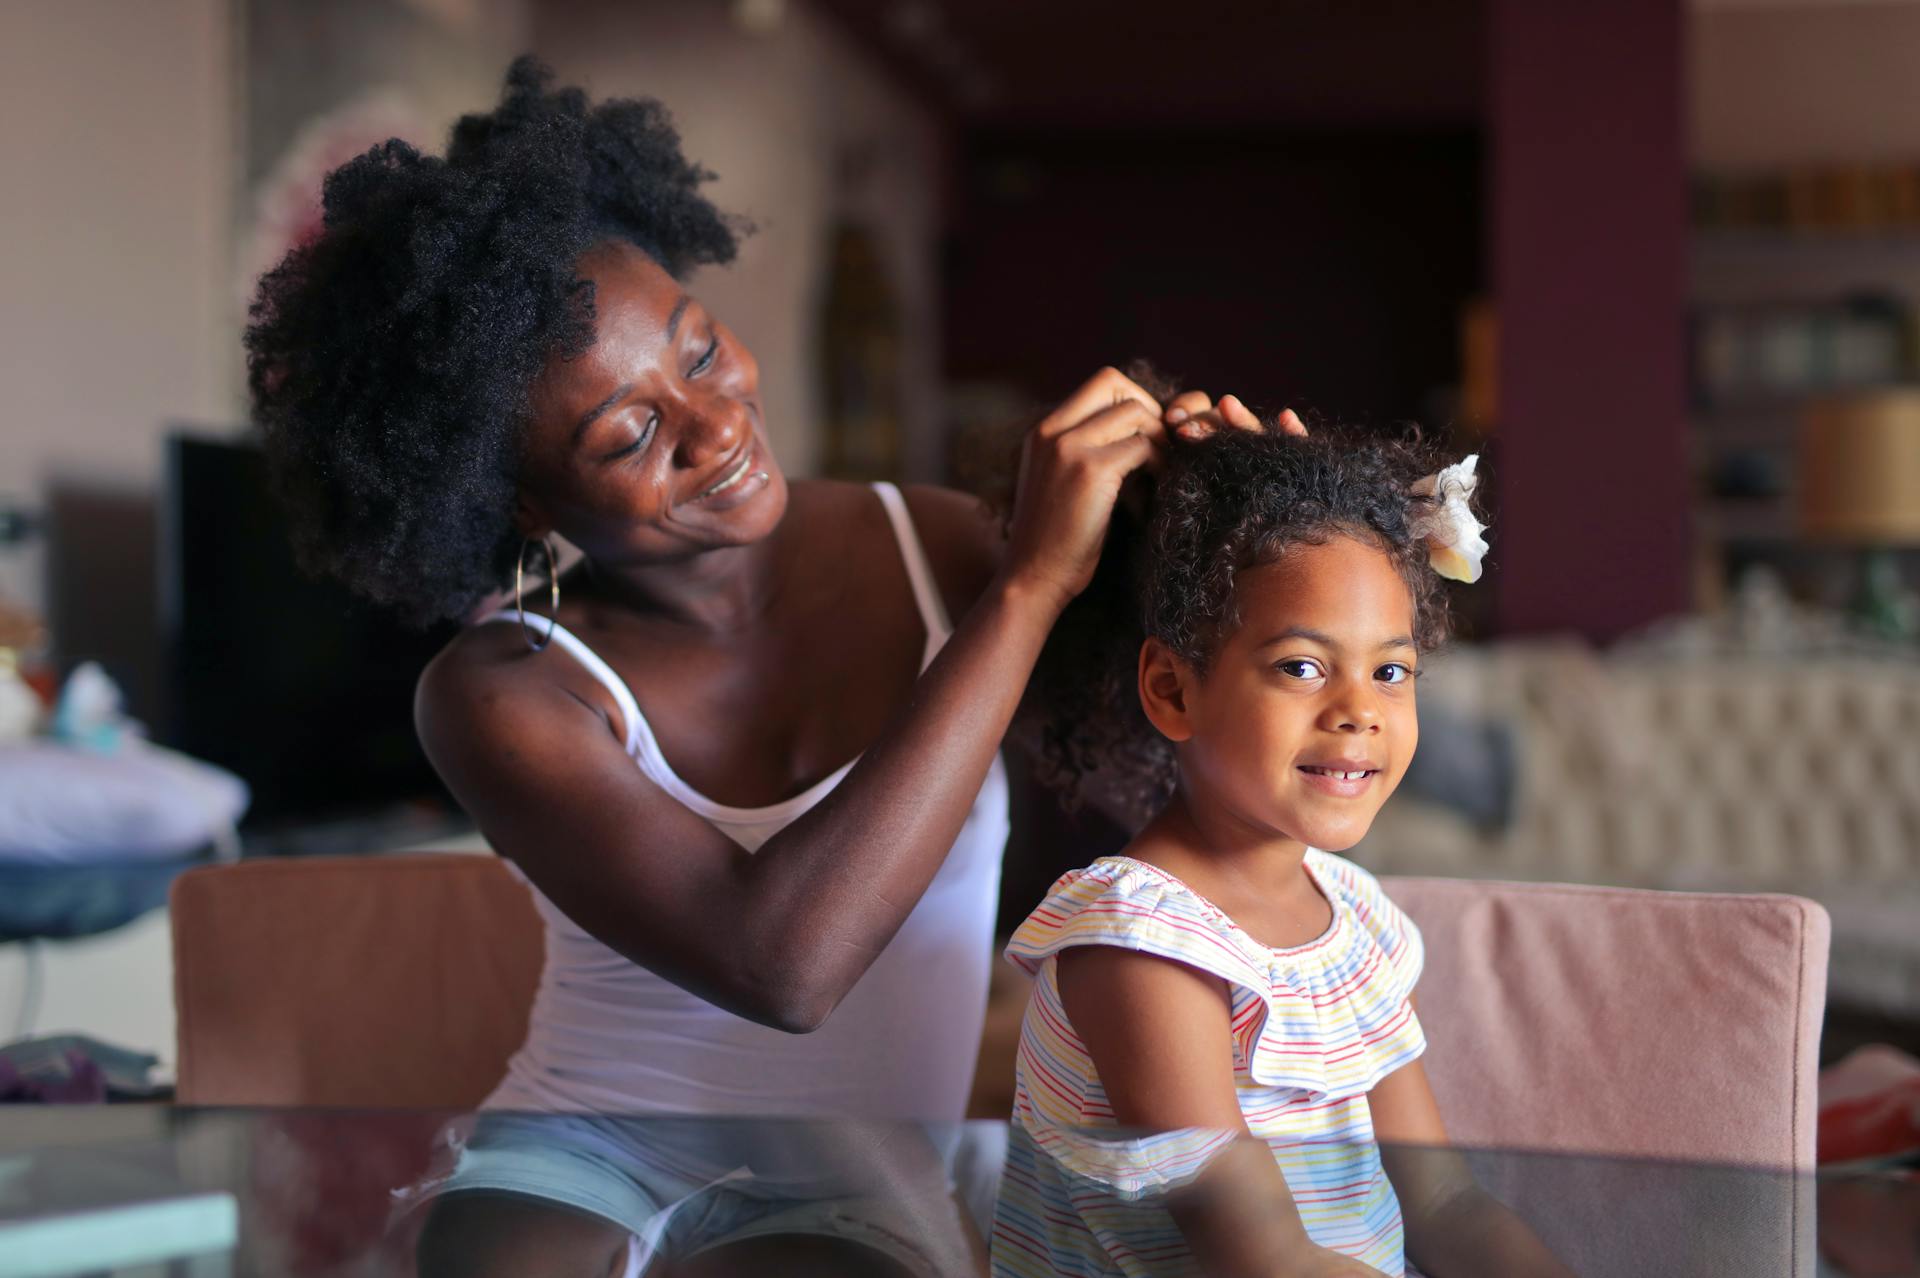 Woman fixes her daughter's hair | Source: Pexels